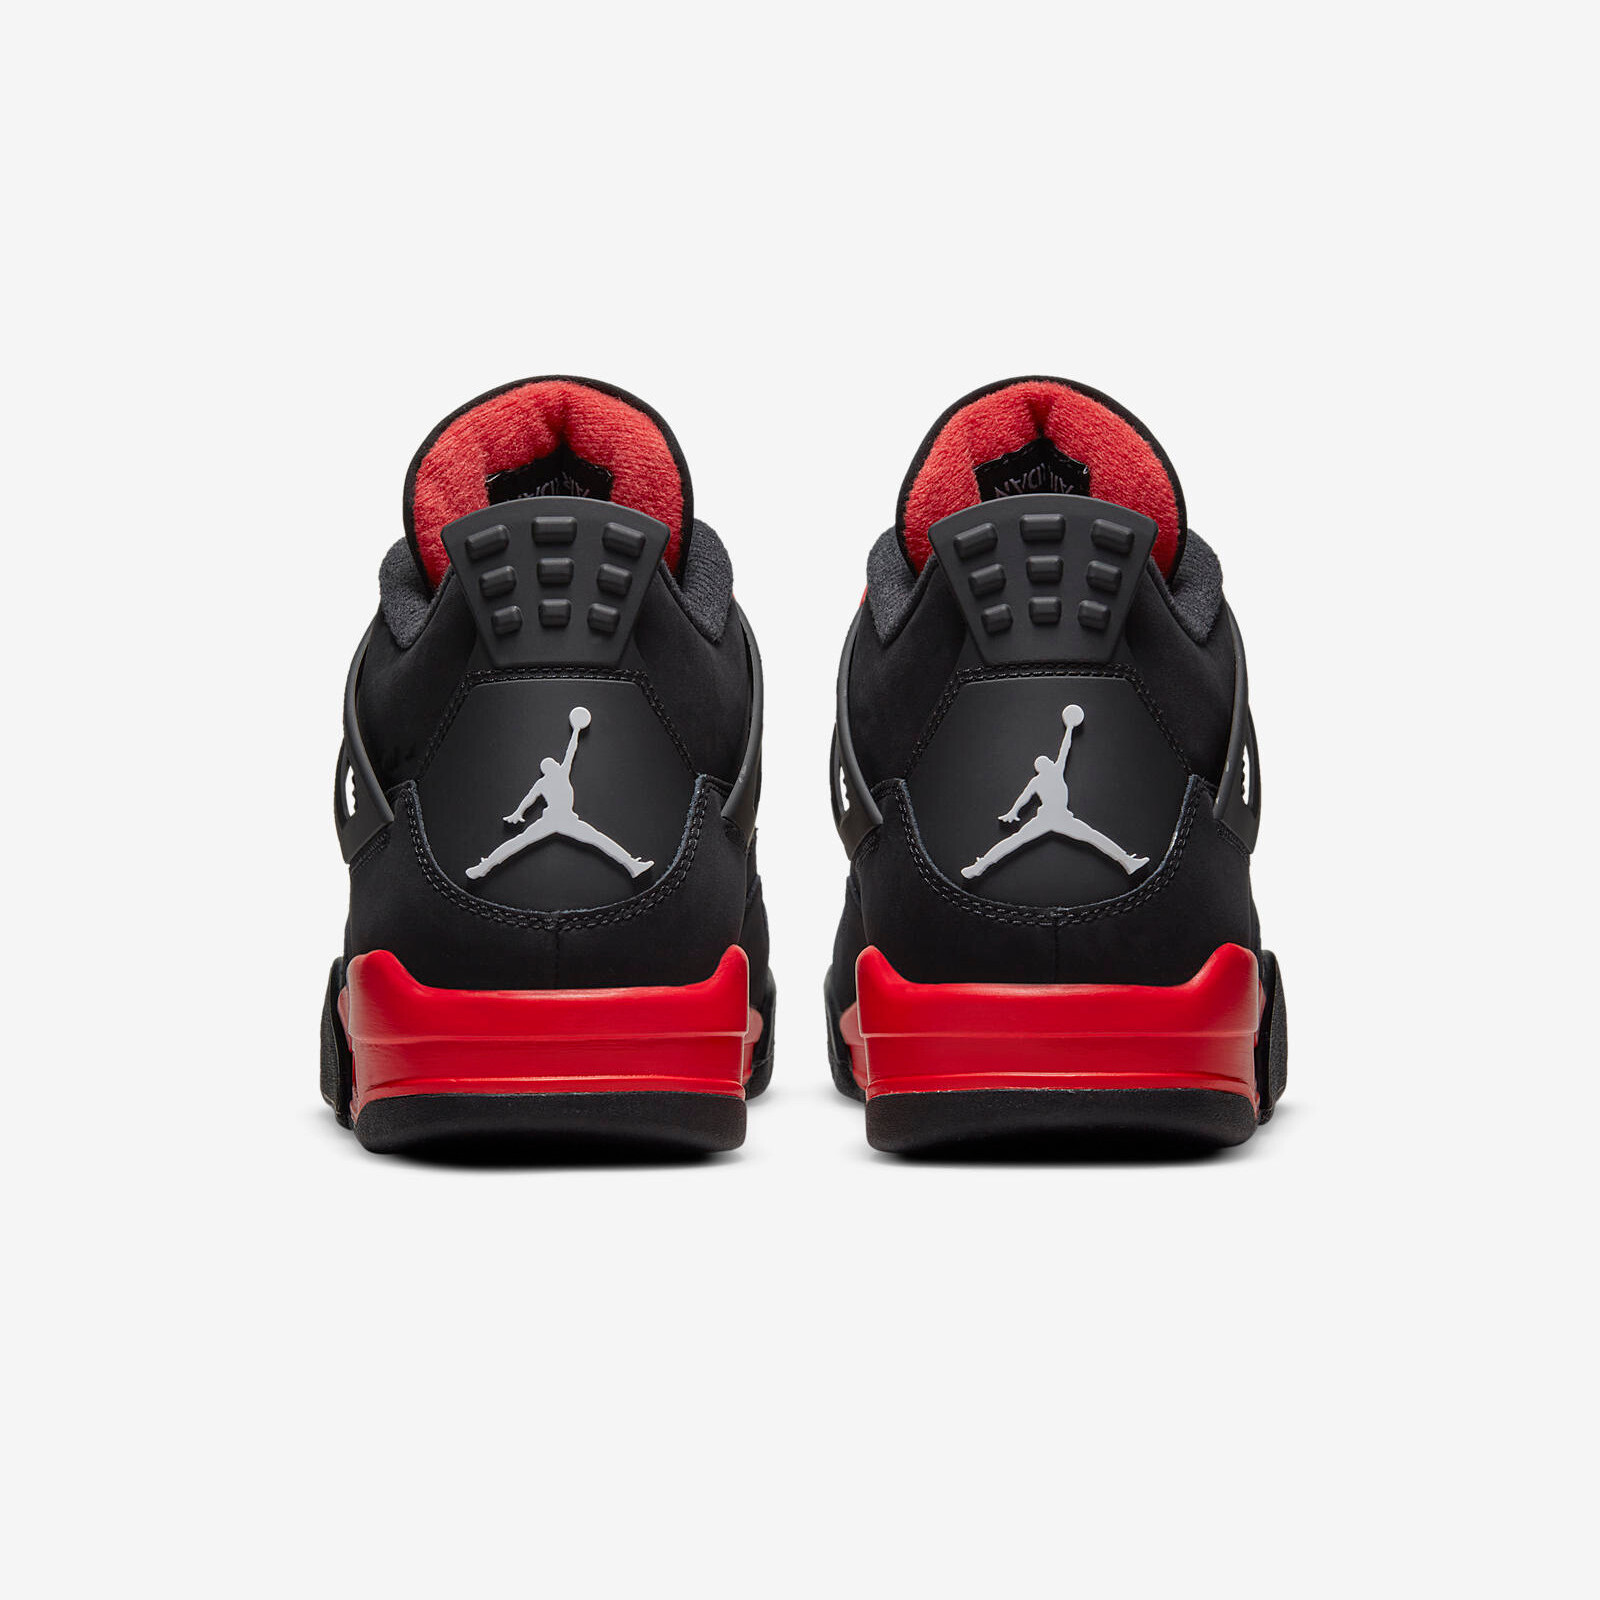 Air Jordan 4 Retro
« Red Thunder »